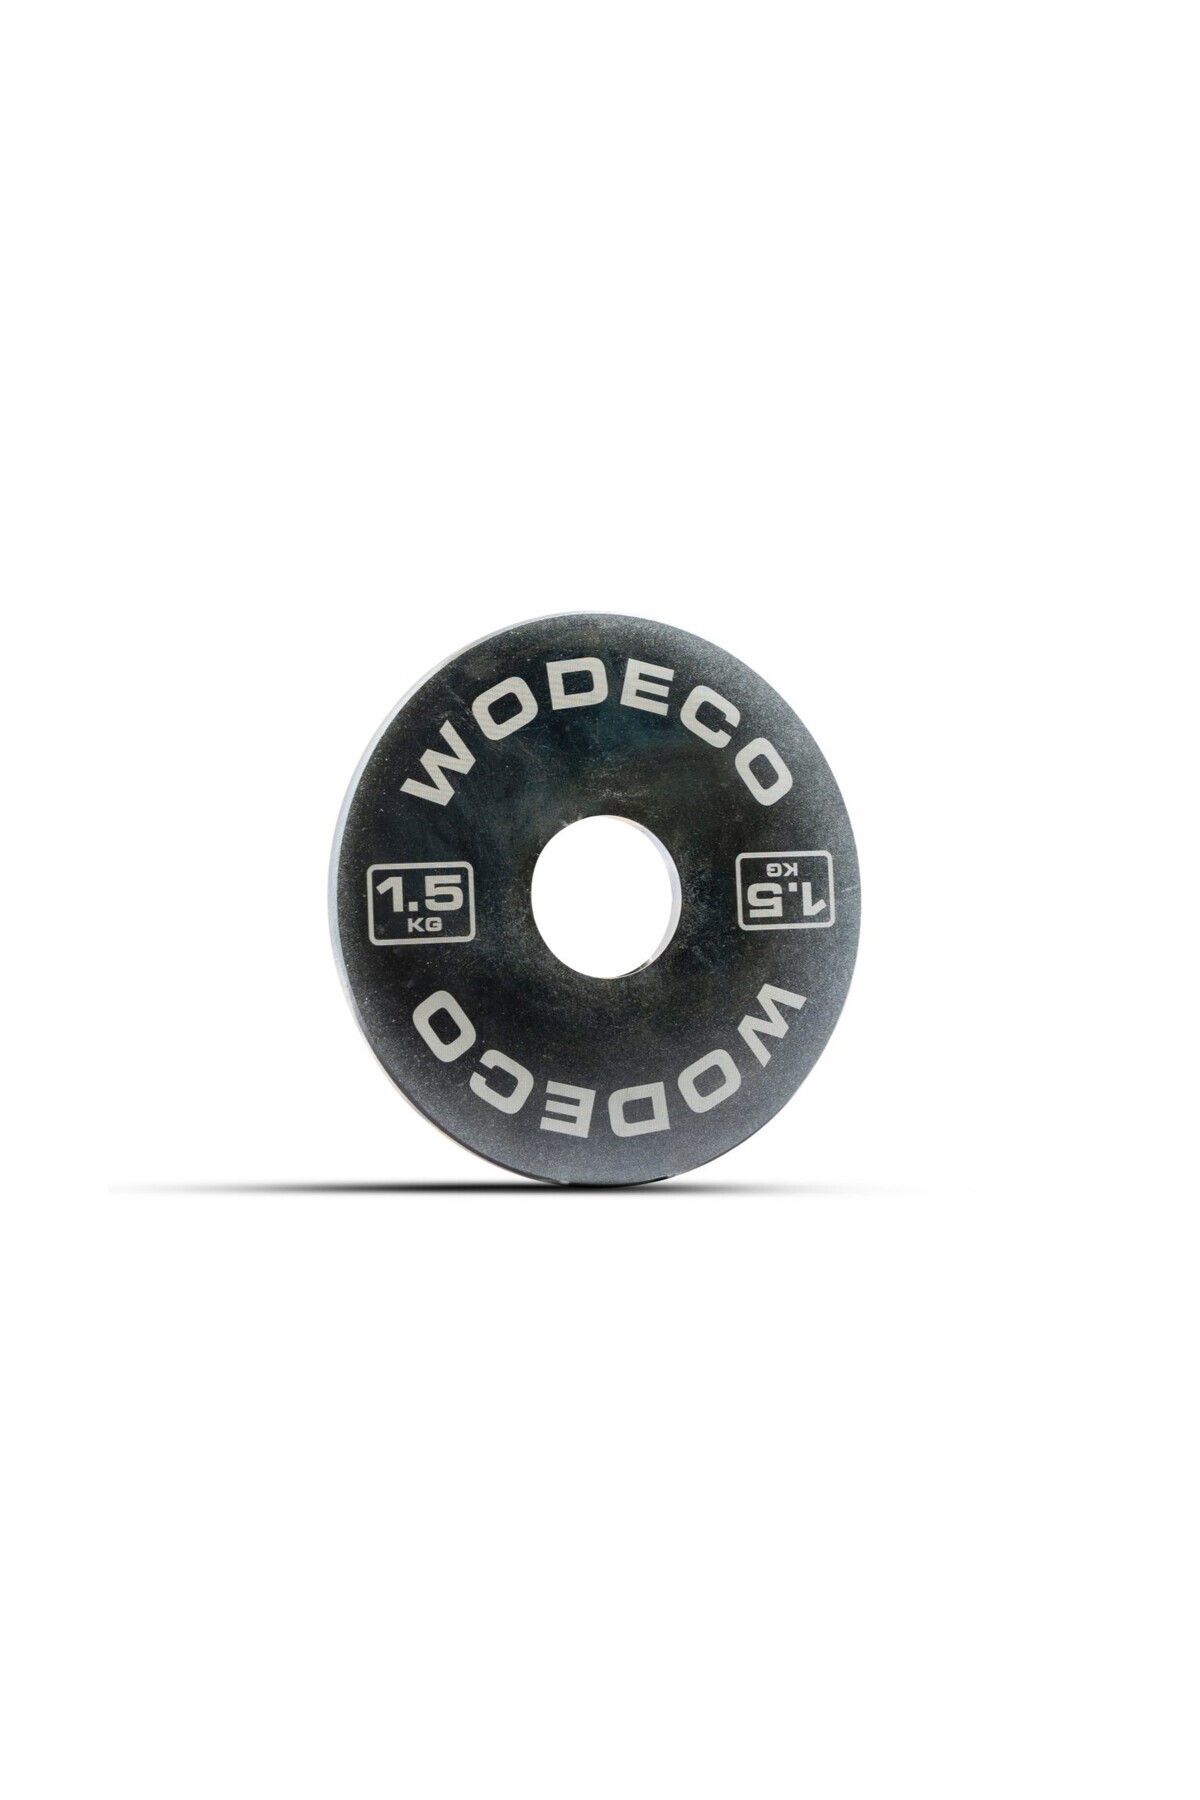 Wodeco 1,5 Kg Metal Ara Plaka - Metal Ağırlık Plakası - 2 Adet